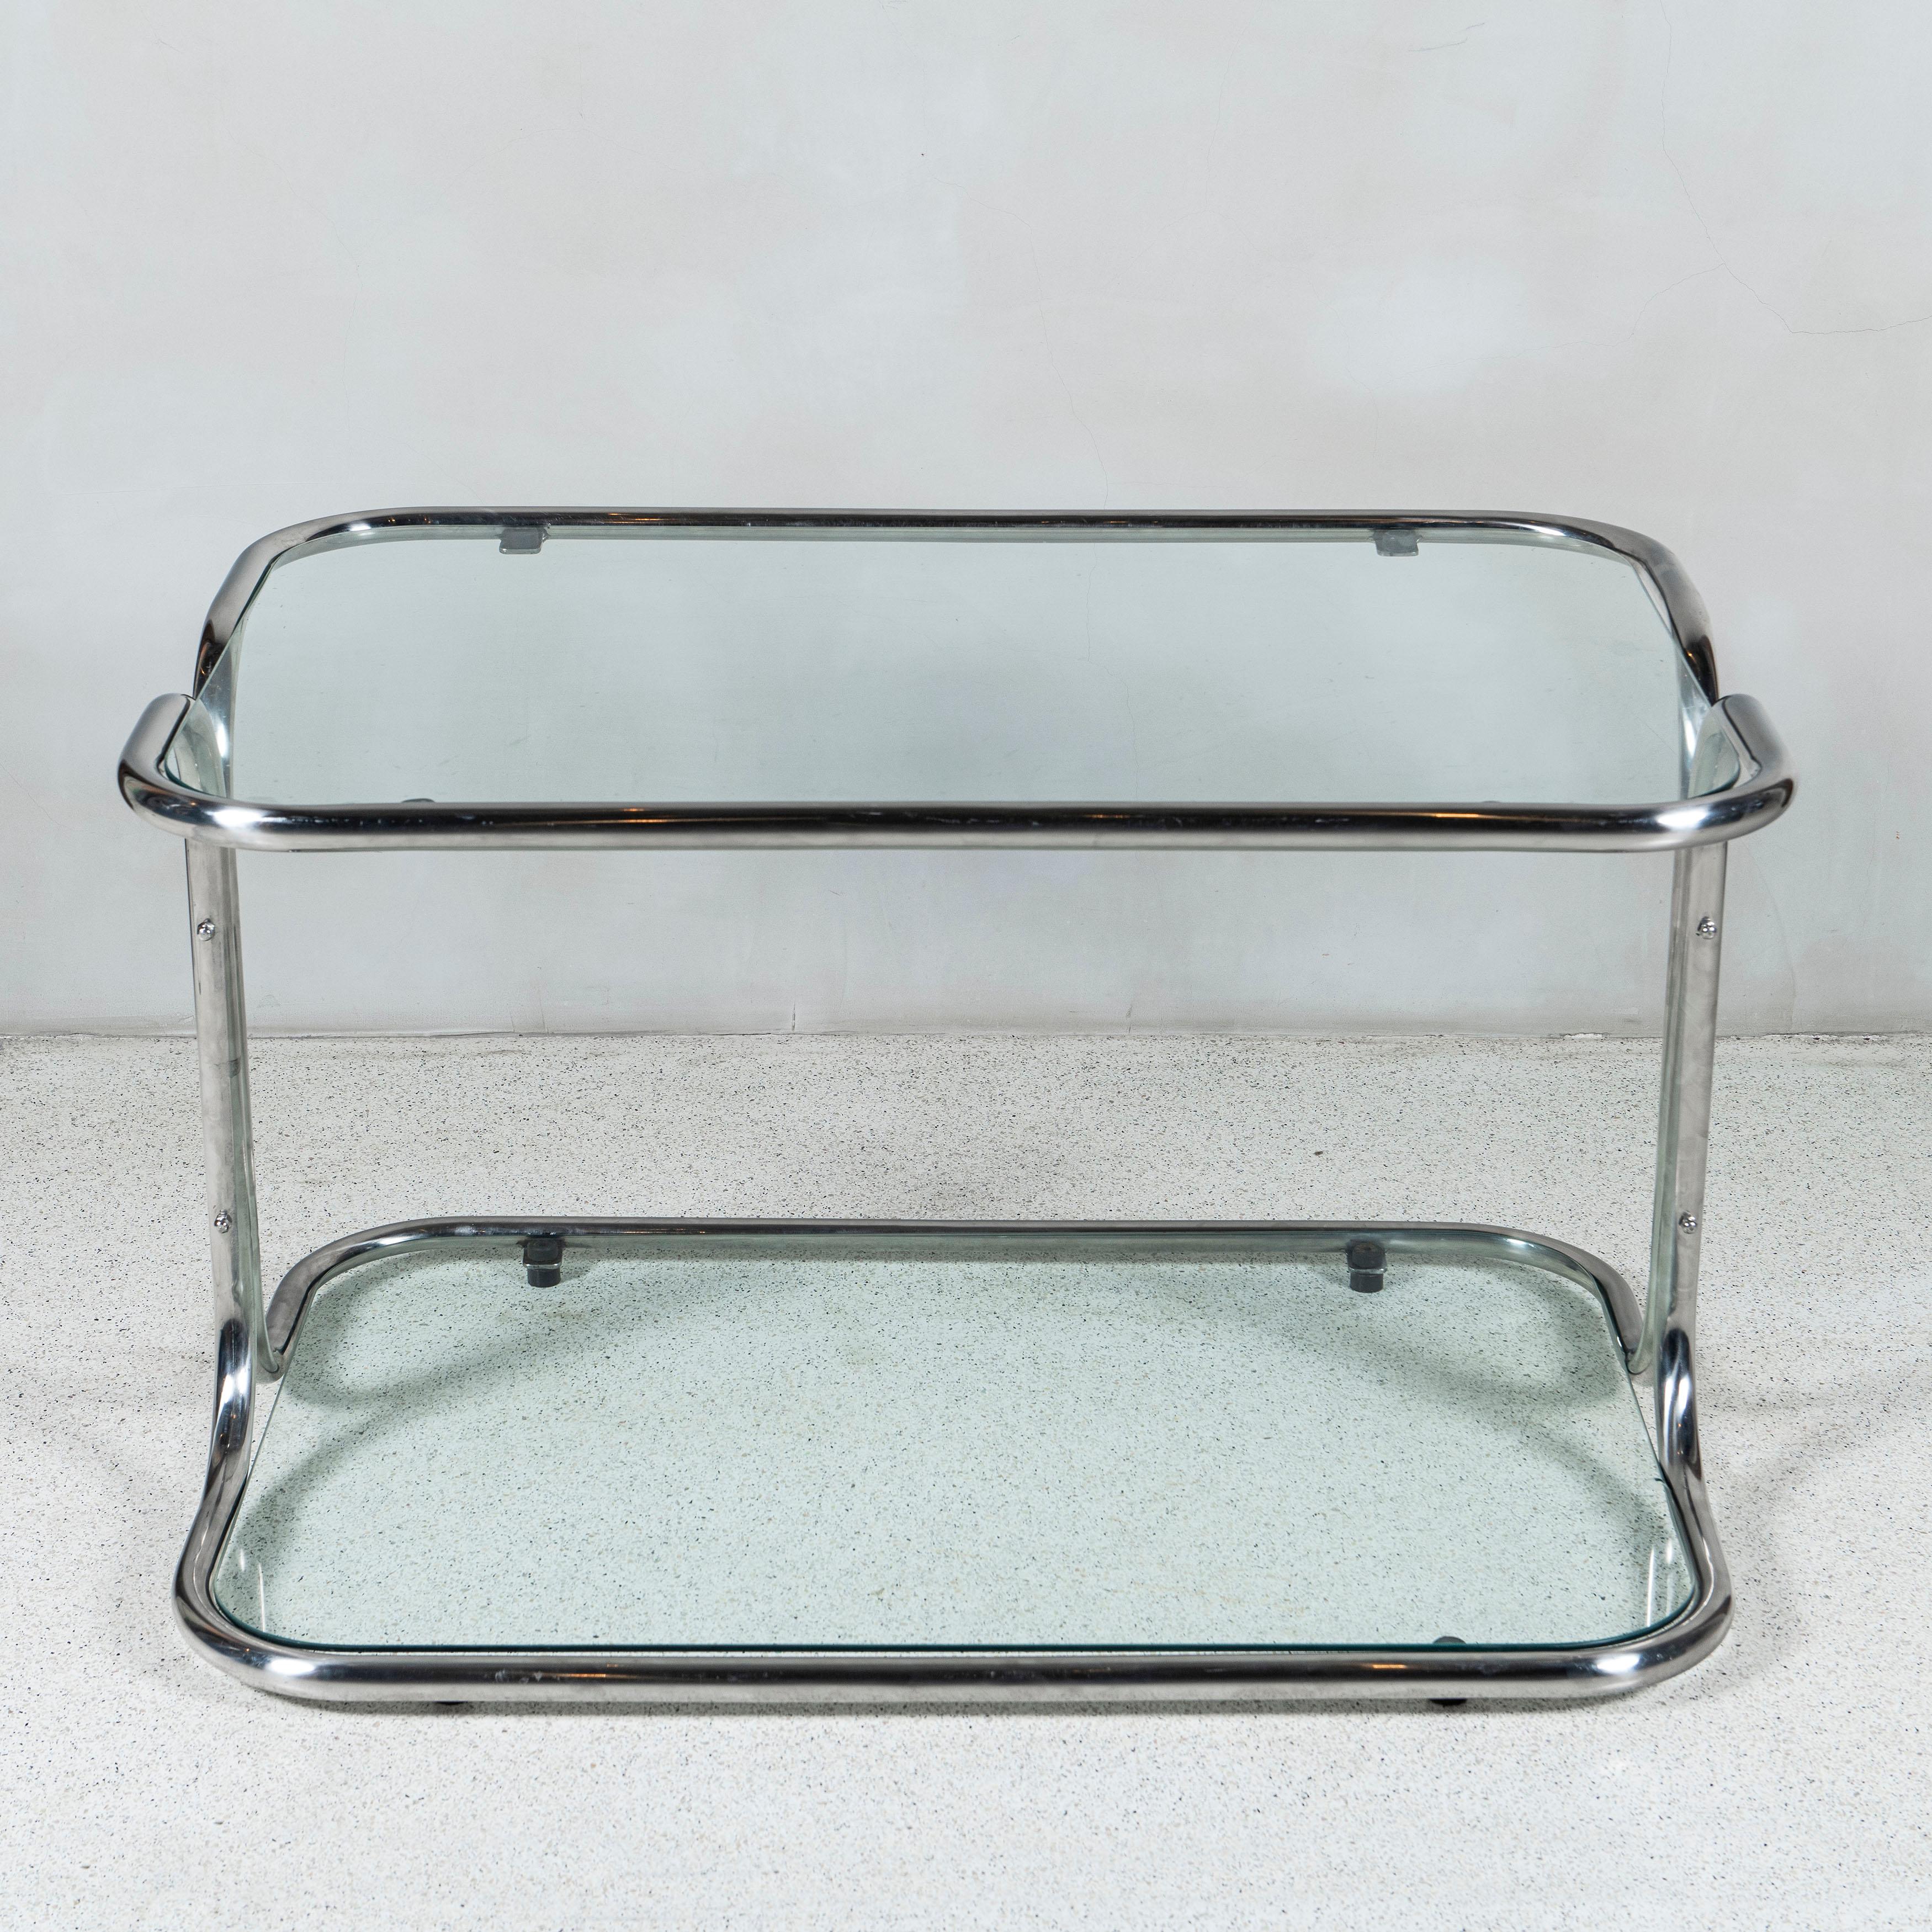 Chrome and glass low table designed by architects Reinaldo Leiro and Arnoldo Gaite, Argentina, Buenos Aires, 1970-1971.

Reinaldo Leiro (Argentina, 1930-2016)
Arnoldo Gaite (Argentina, 1934-2020).